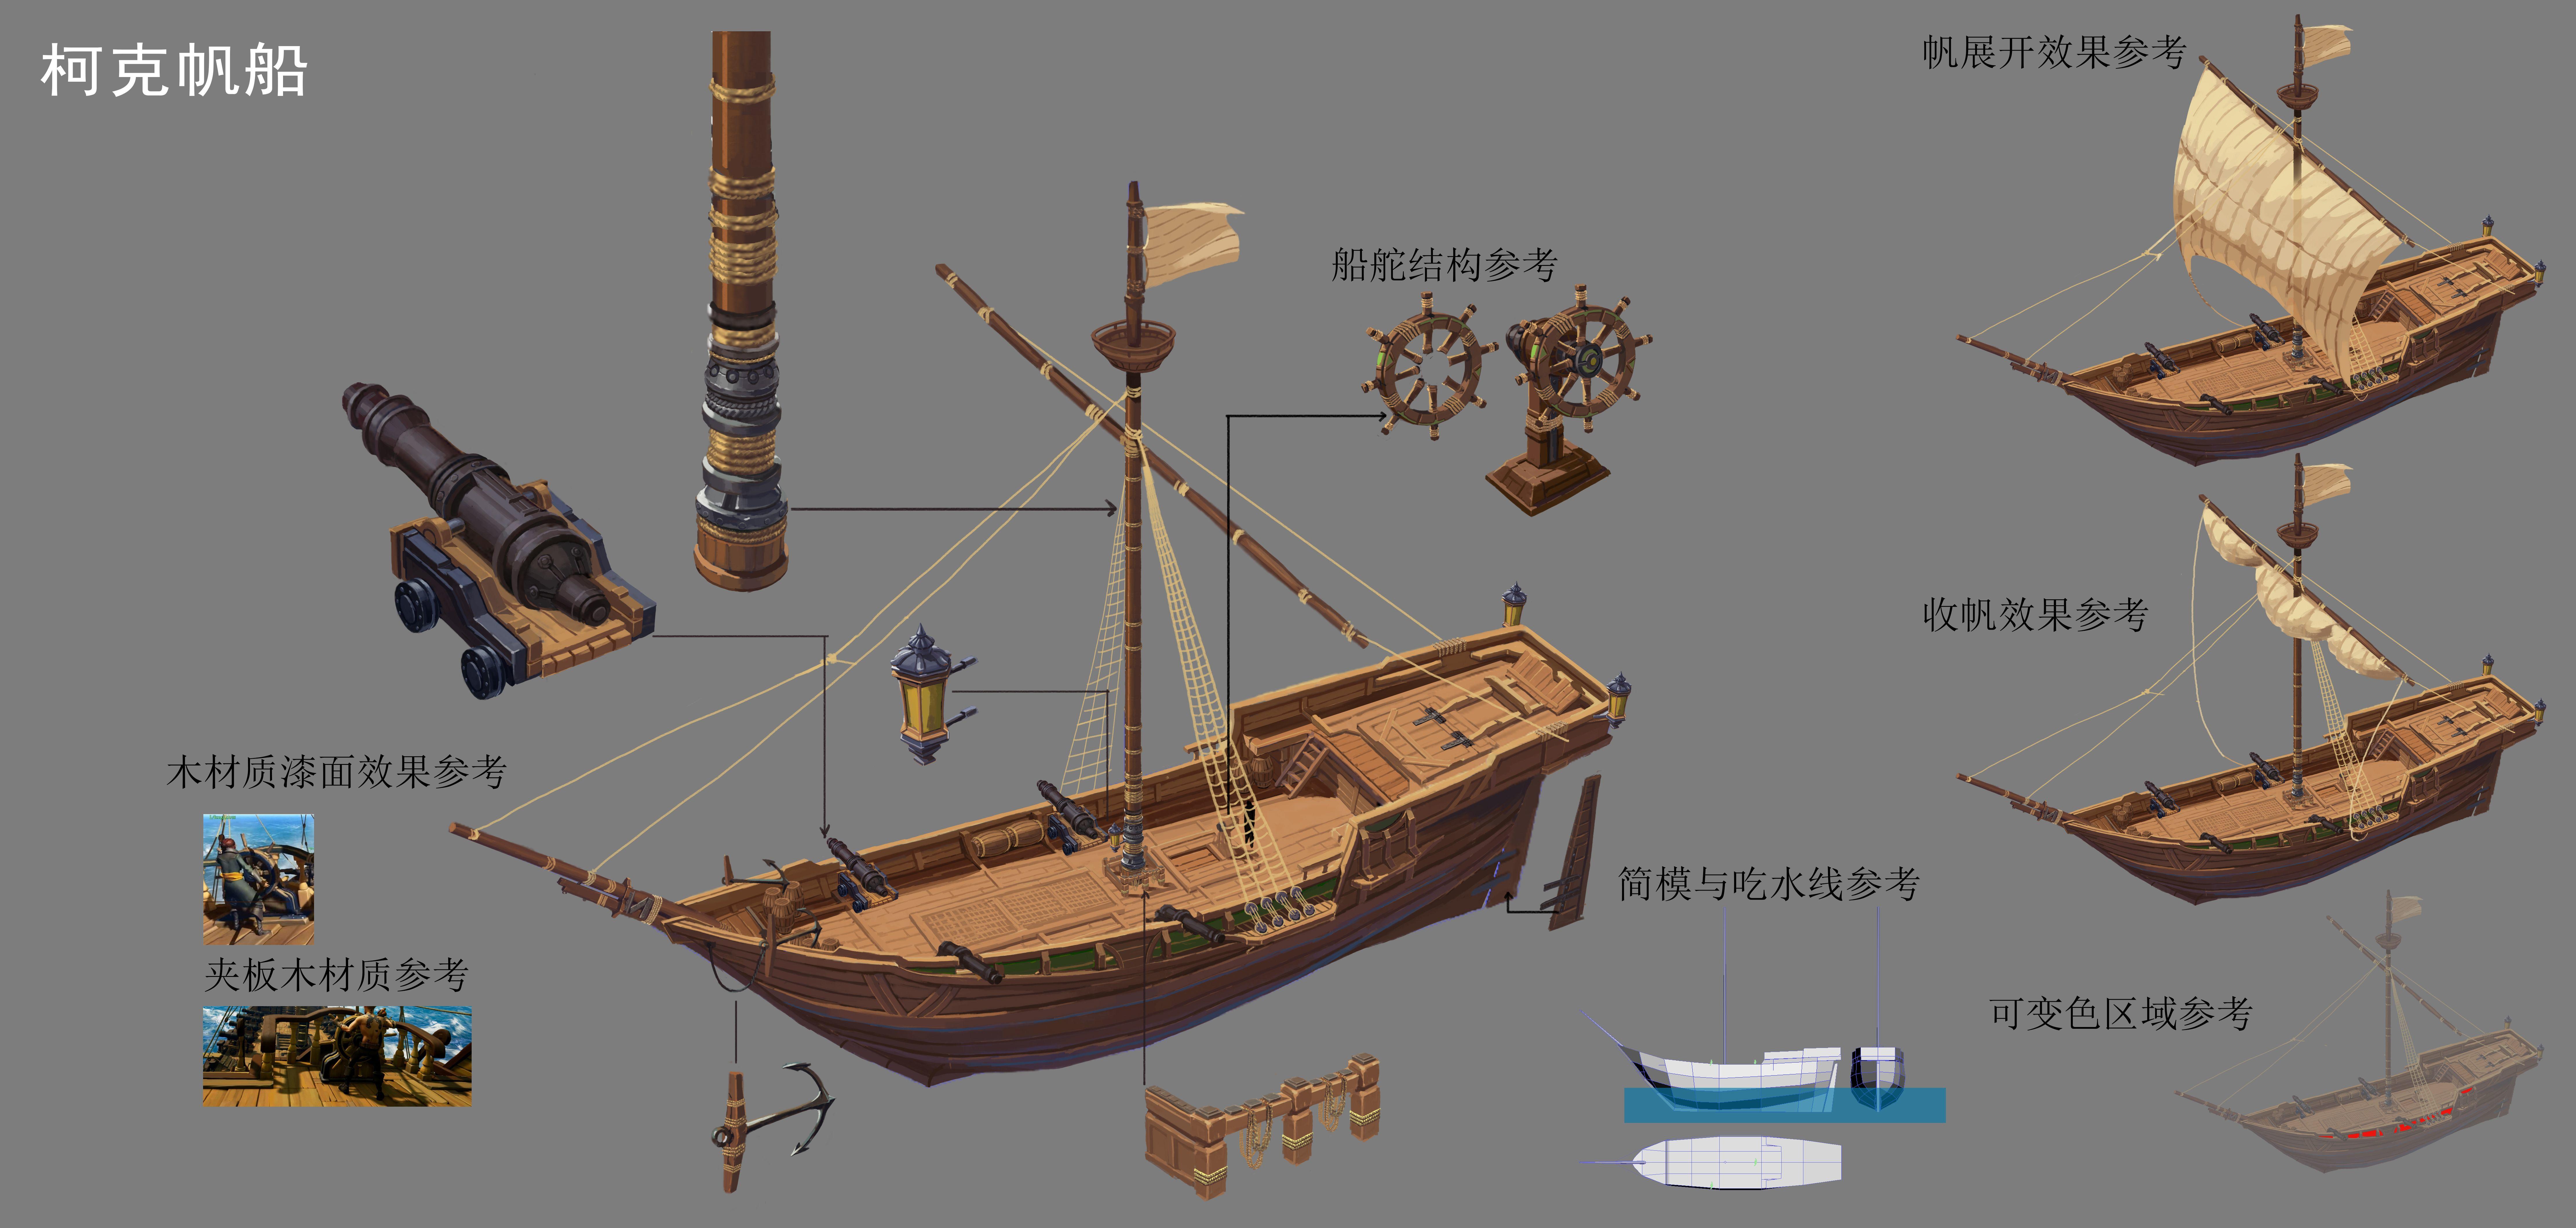 THORINSTRUMENTS（带设备）古铜色航海六分海上星象仪海洋适用于办公室和礼品物品 : 亚马逊中国: 家居